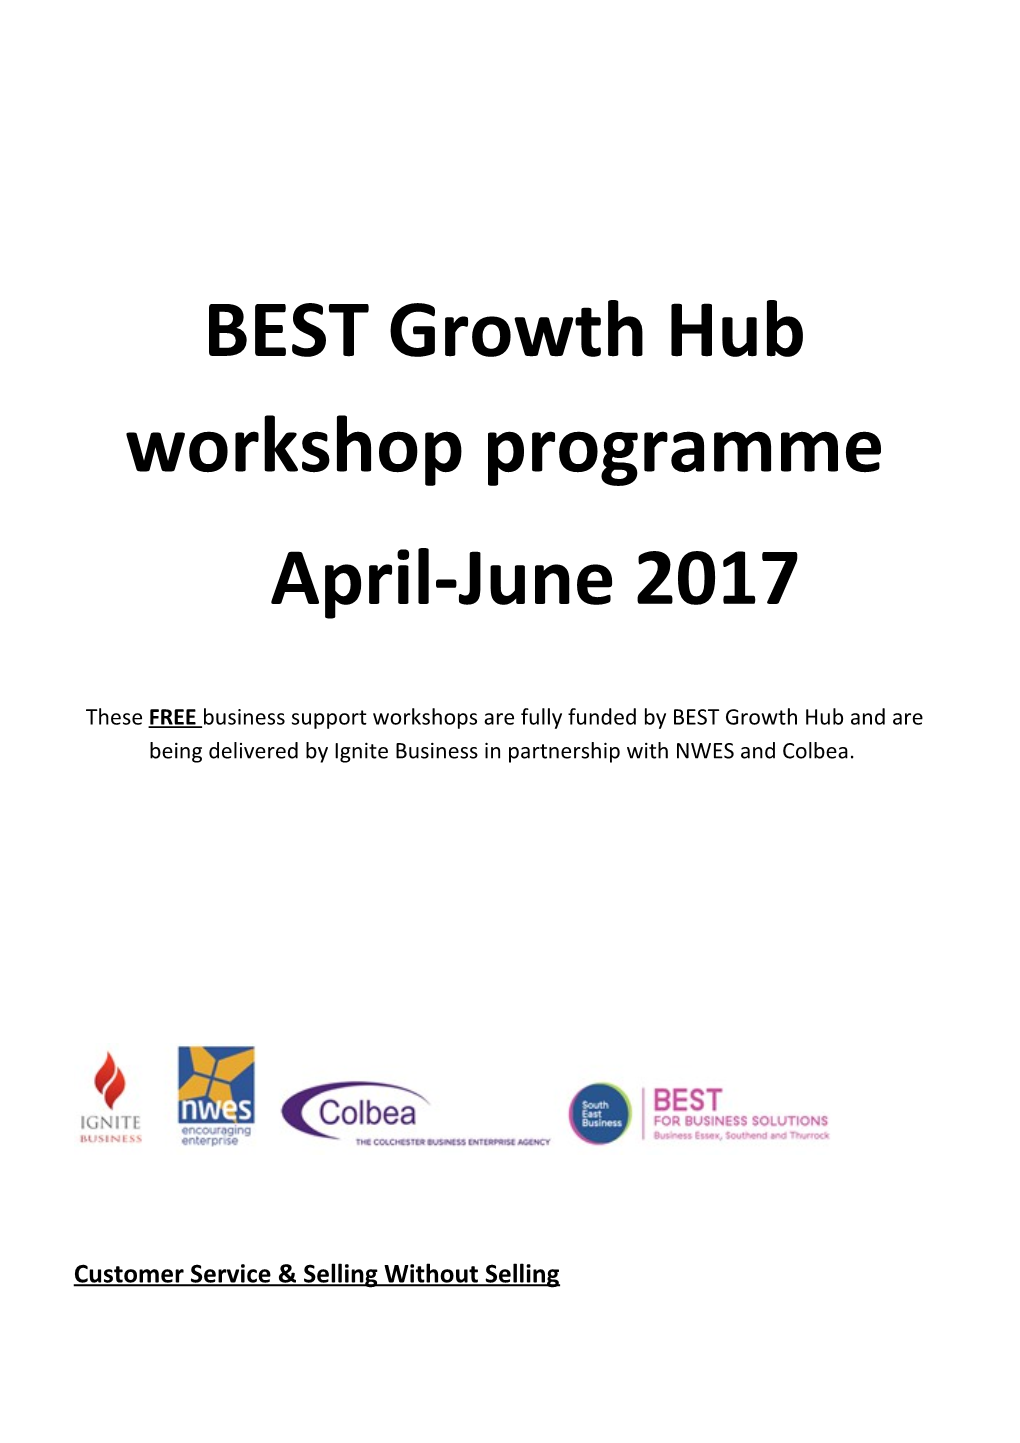 BEST Growth Hub Workshop Programme